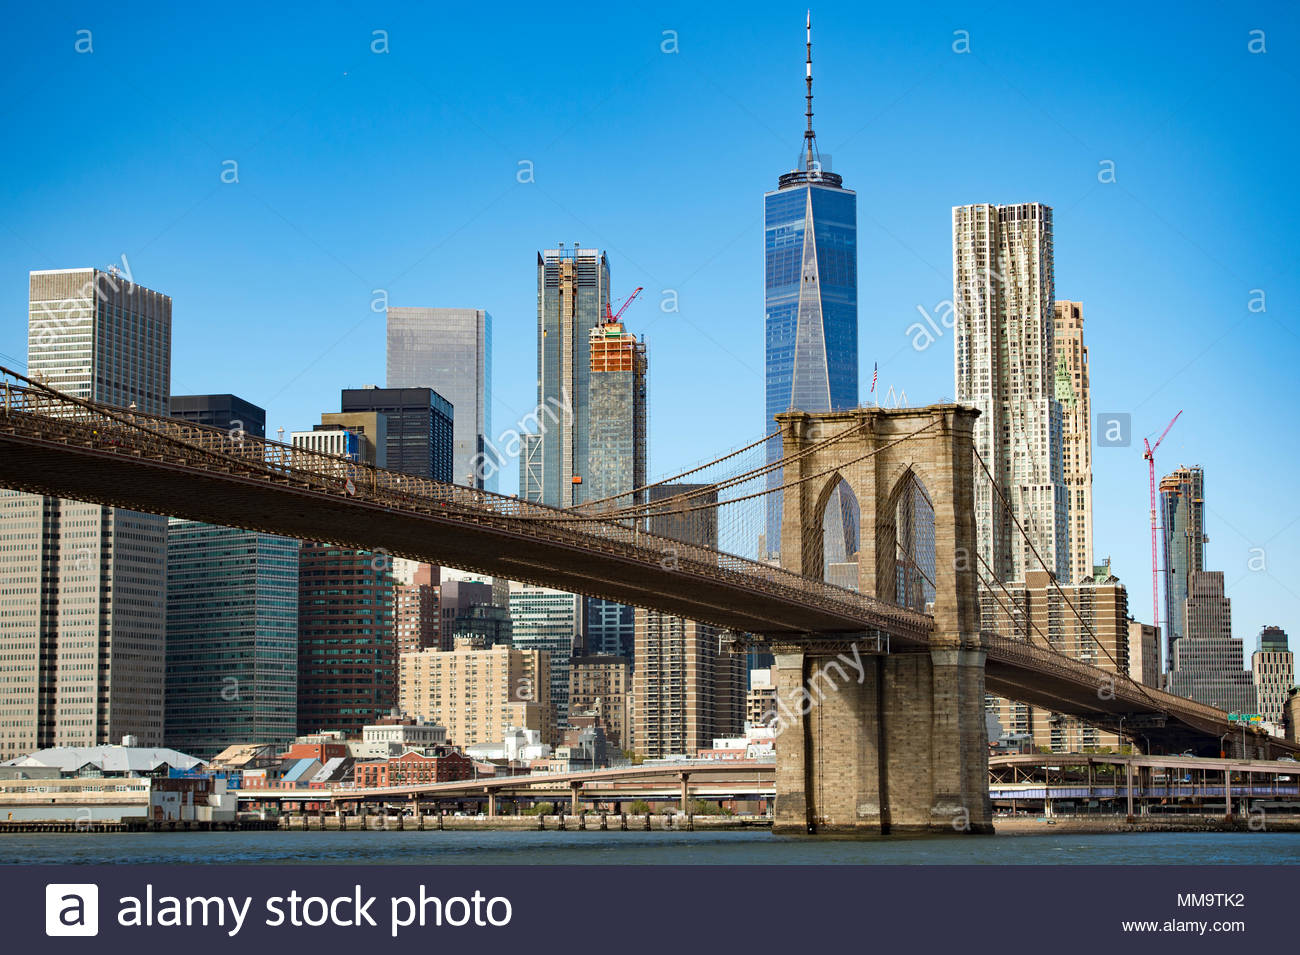 Manhattan Skyline With The Brooklyn Bridge And One World Trade